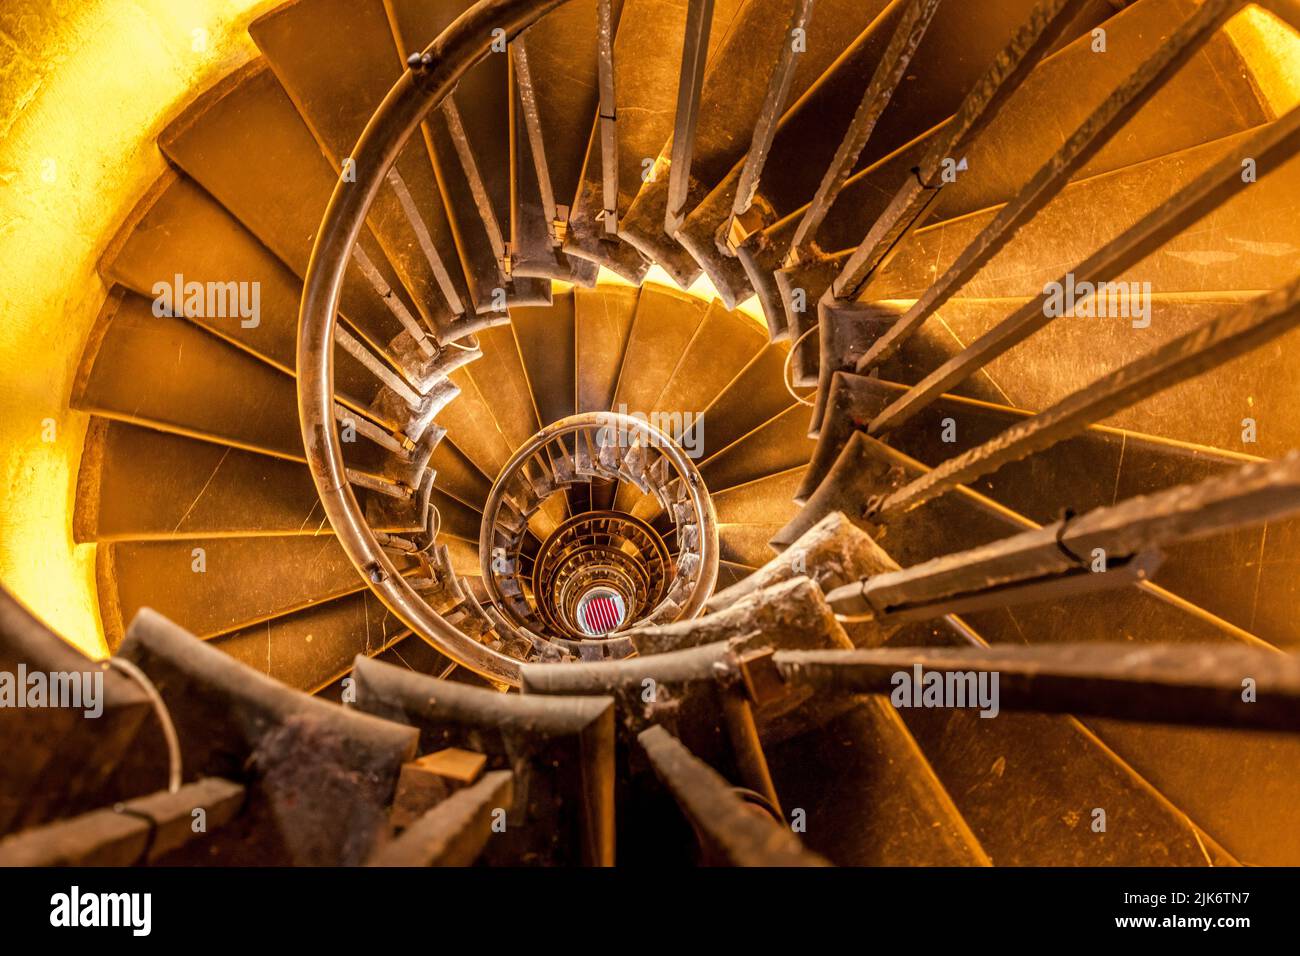 LONDON, UK - NOVEMBER 6 : Spiral Staircase in Monument Tower in London on November 6, 2012 Stock Photo